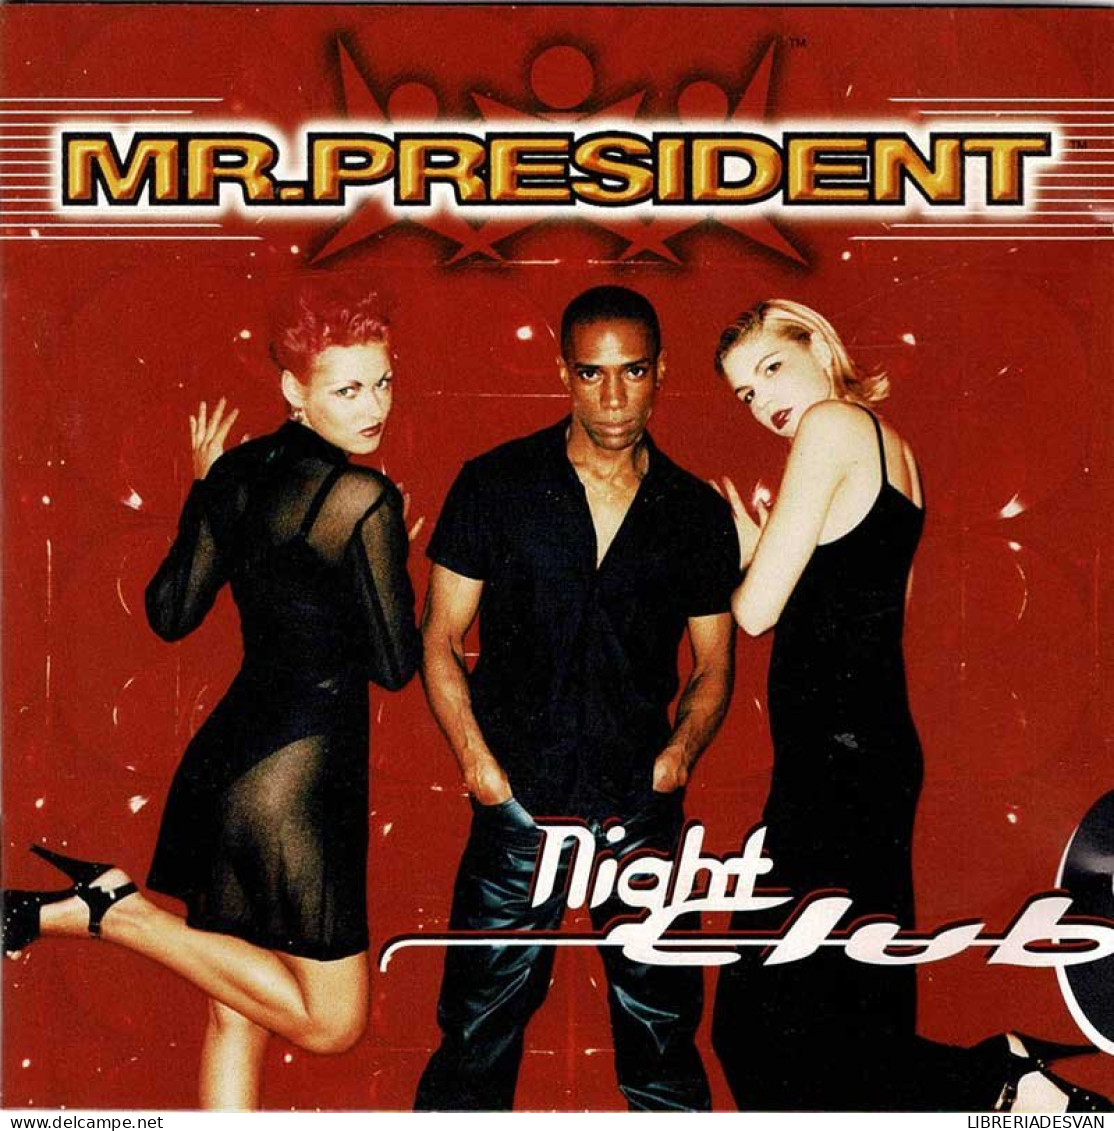 Mr. President - Night Club. CD - Dance, Techno & House